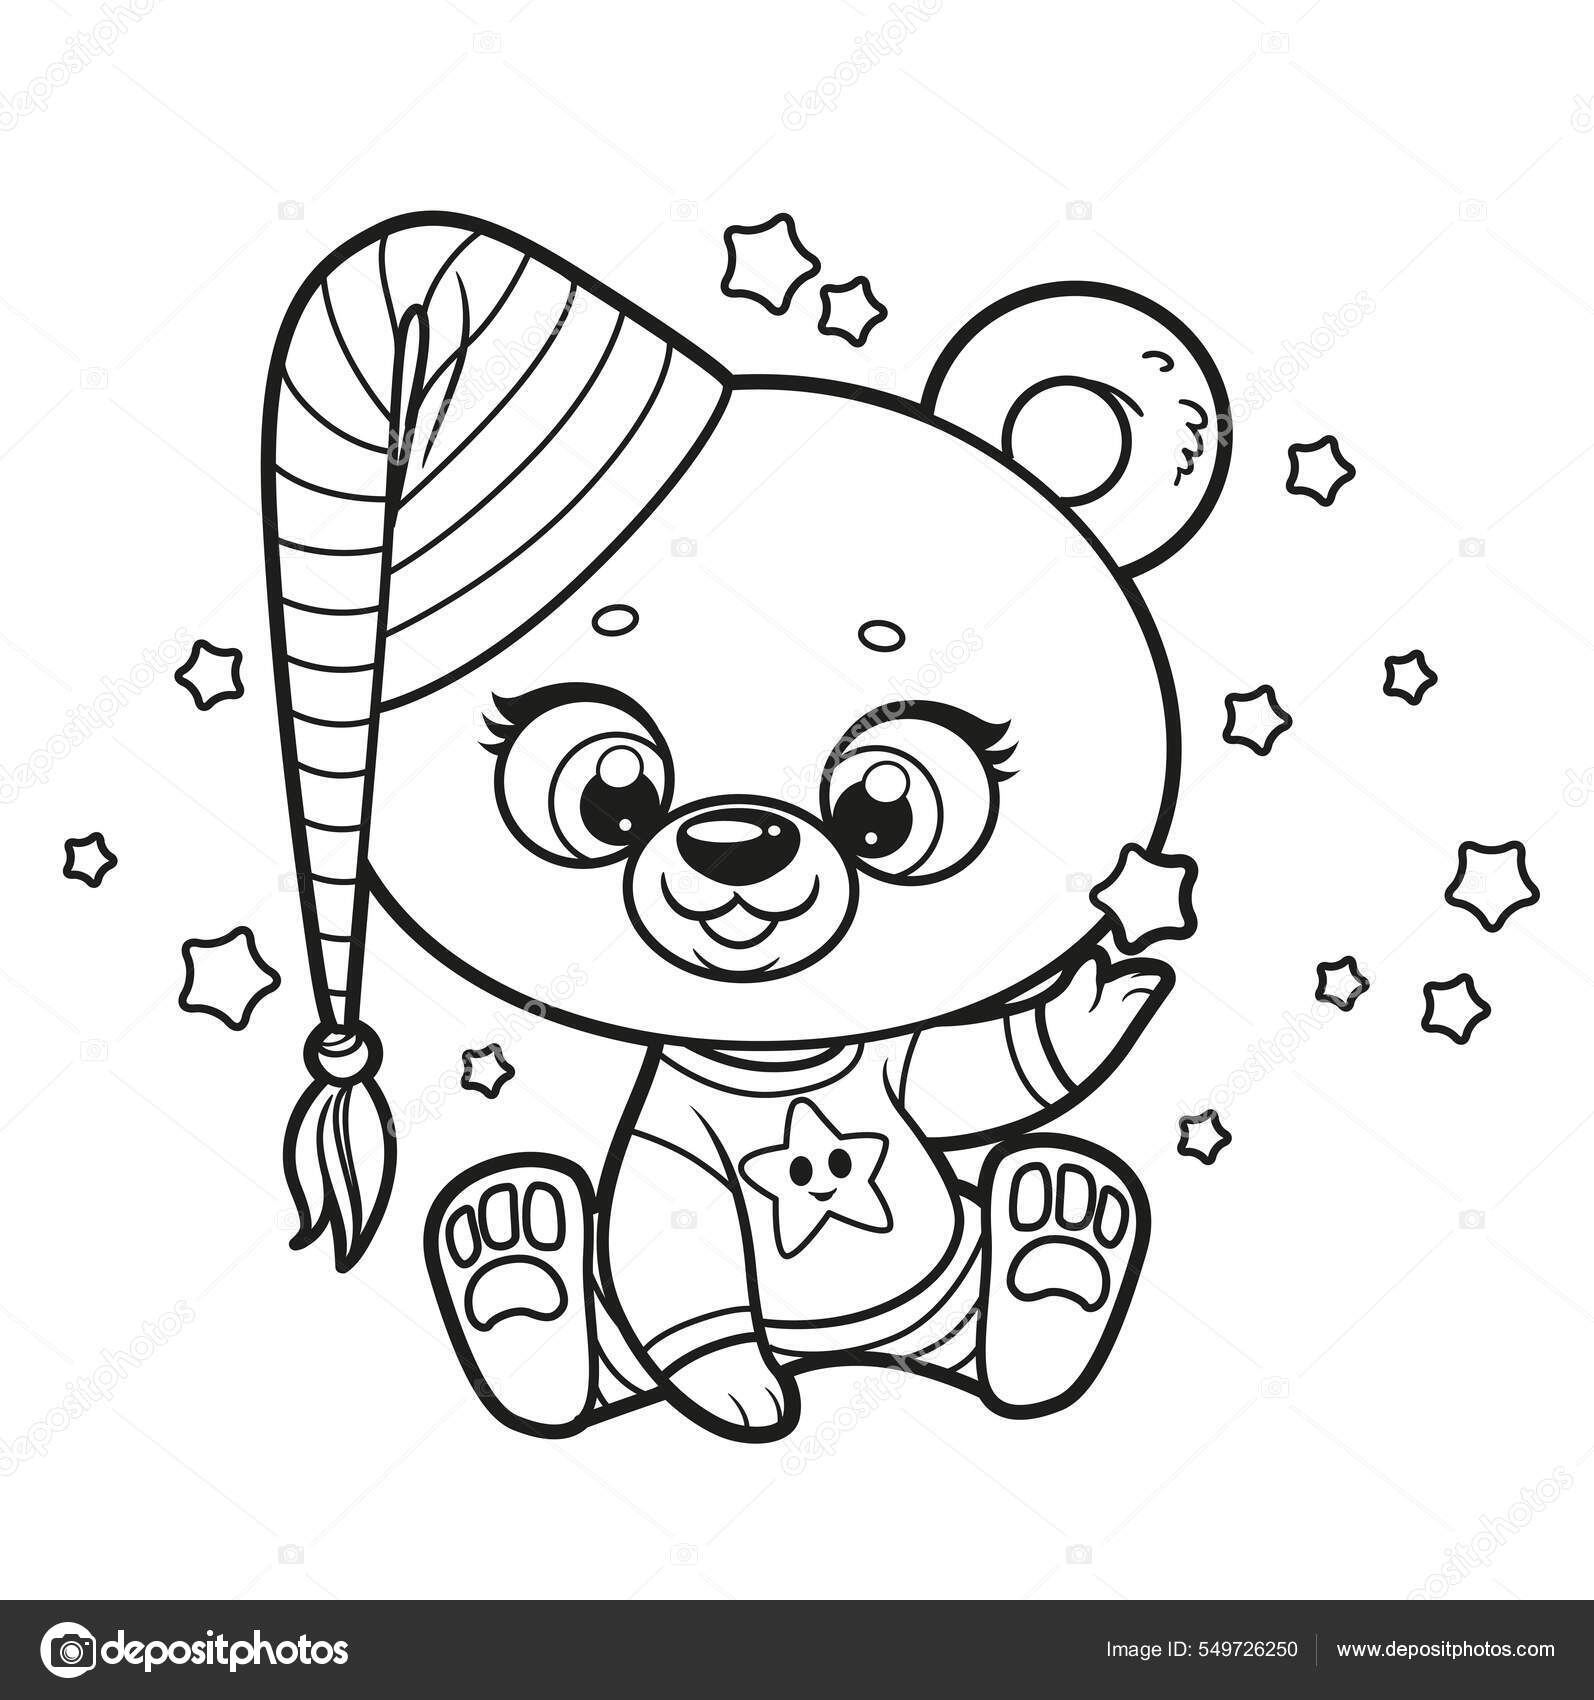 Cute cartoon teddy bear cap pajamas stars outline drawing coloring stock vector by yadviga